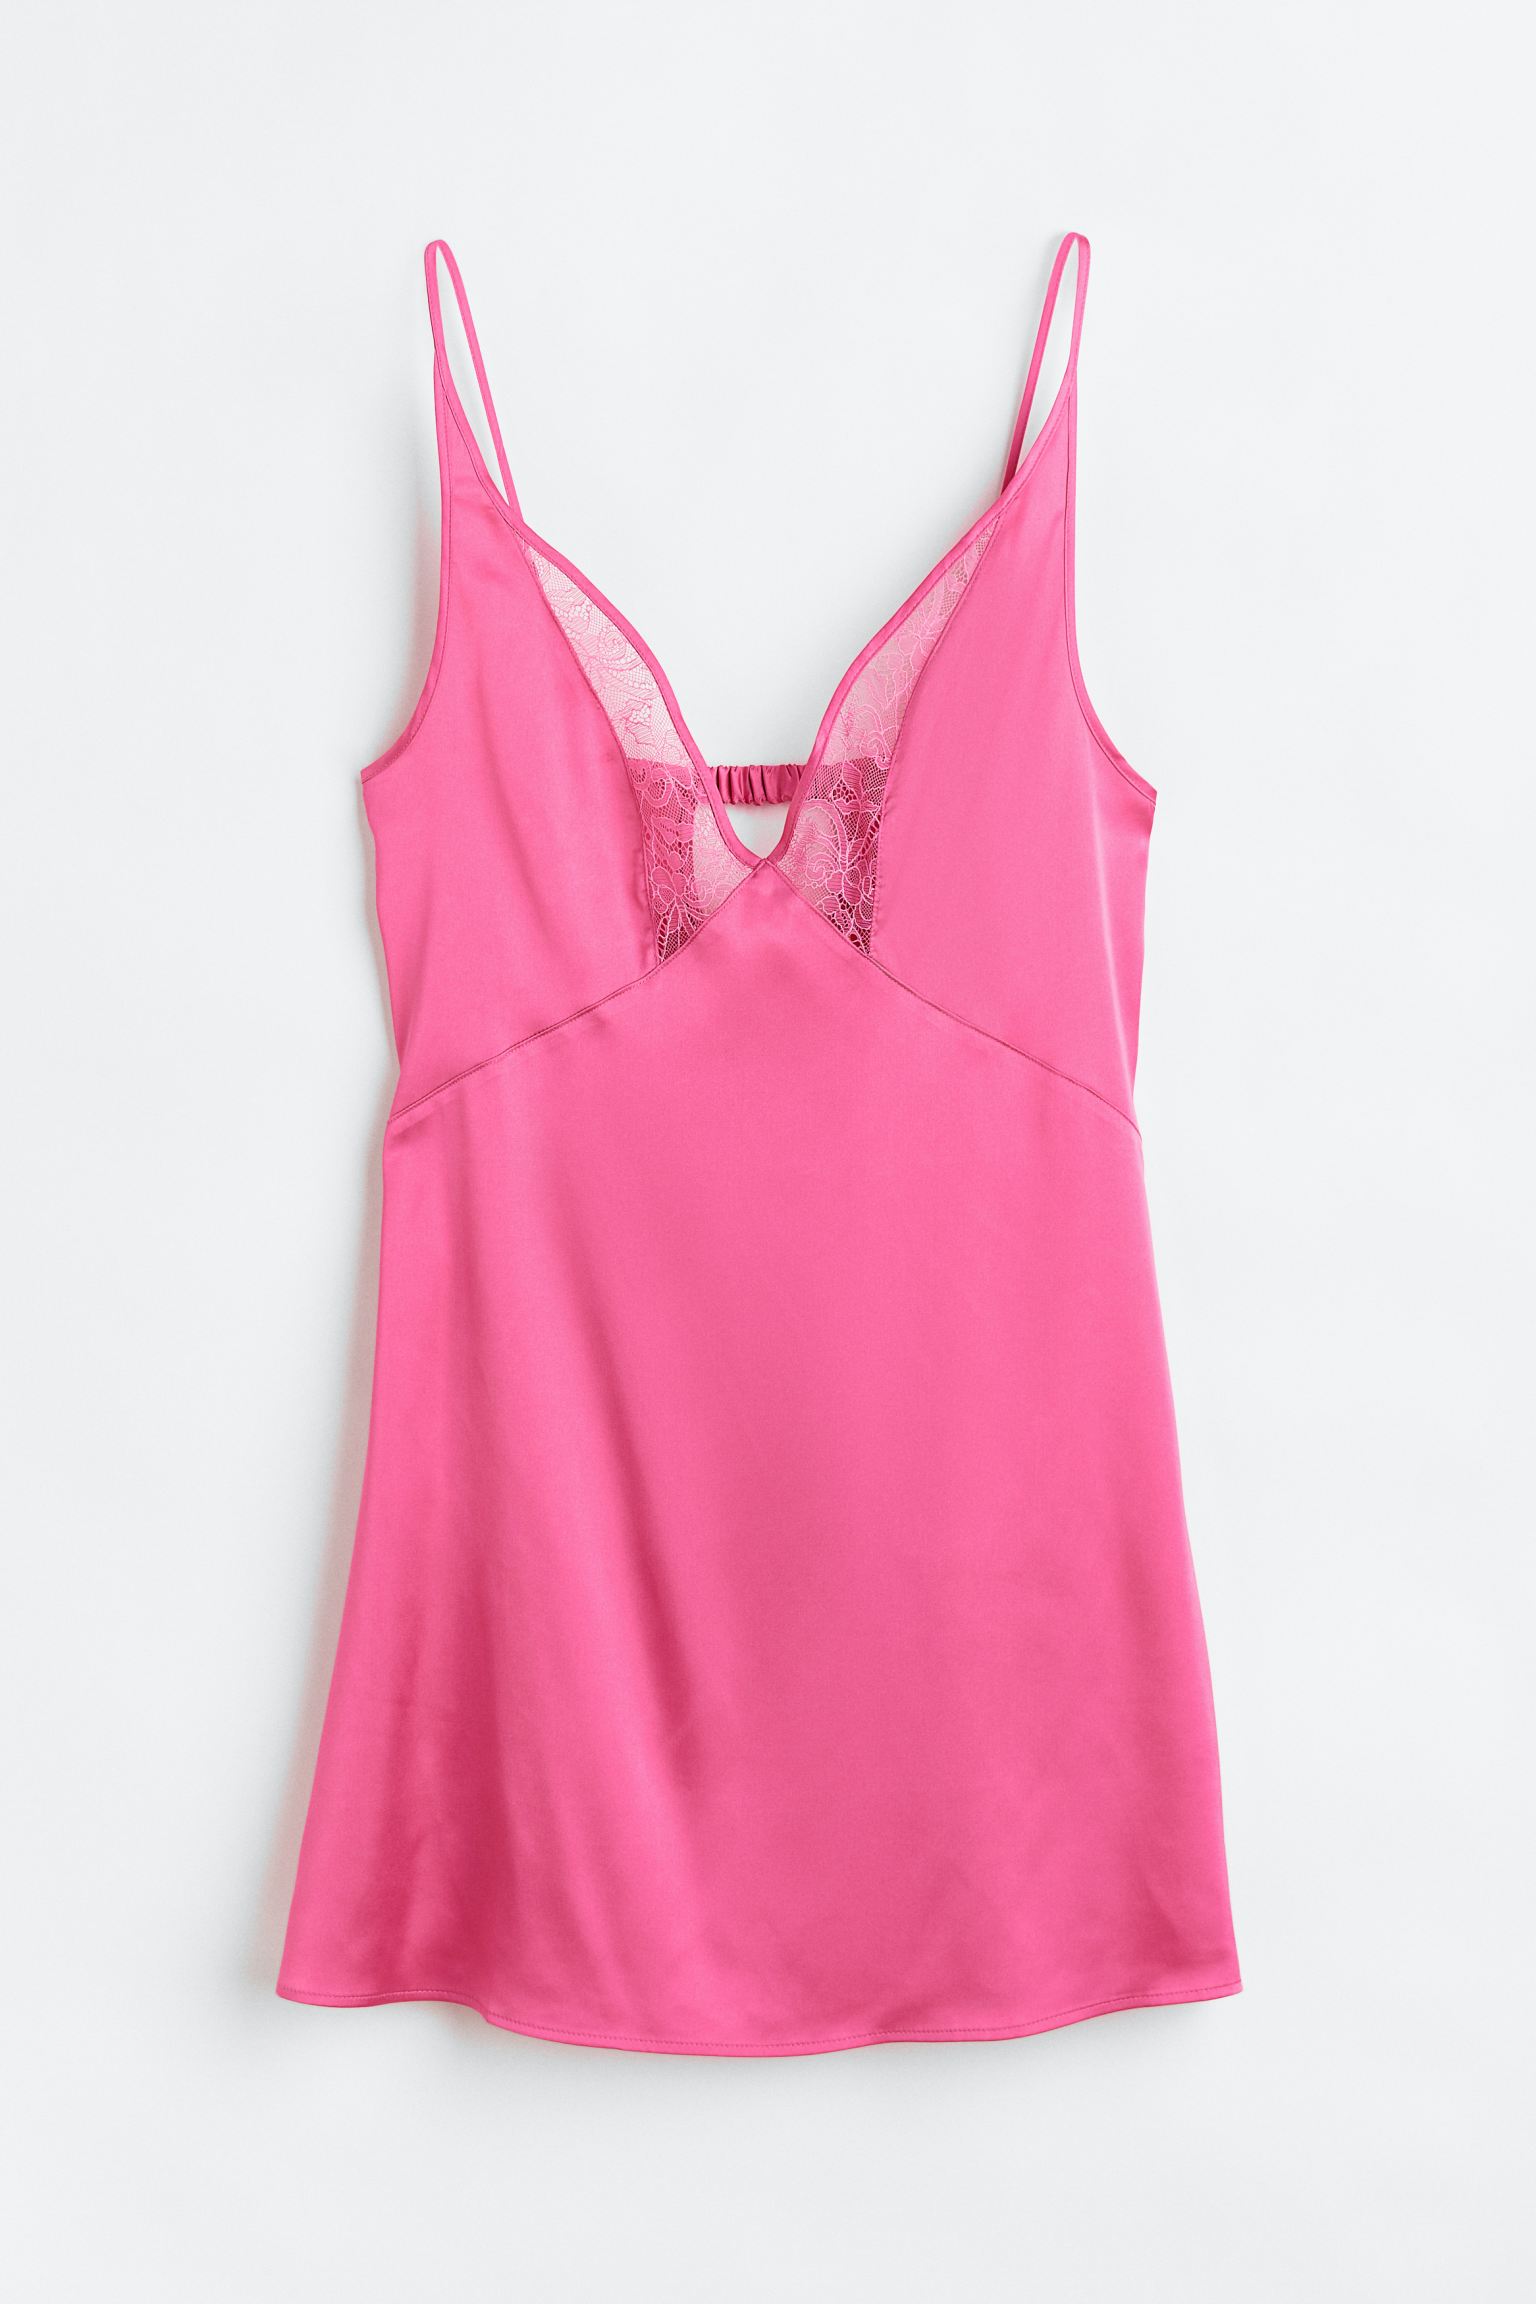 Ночная сорочка женская H&M 1139521004 розовая XL (доставка из-за рубежа)